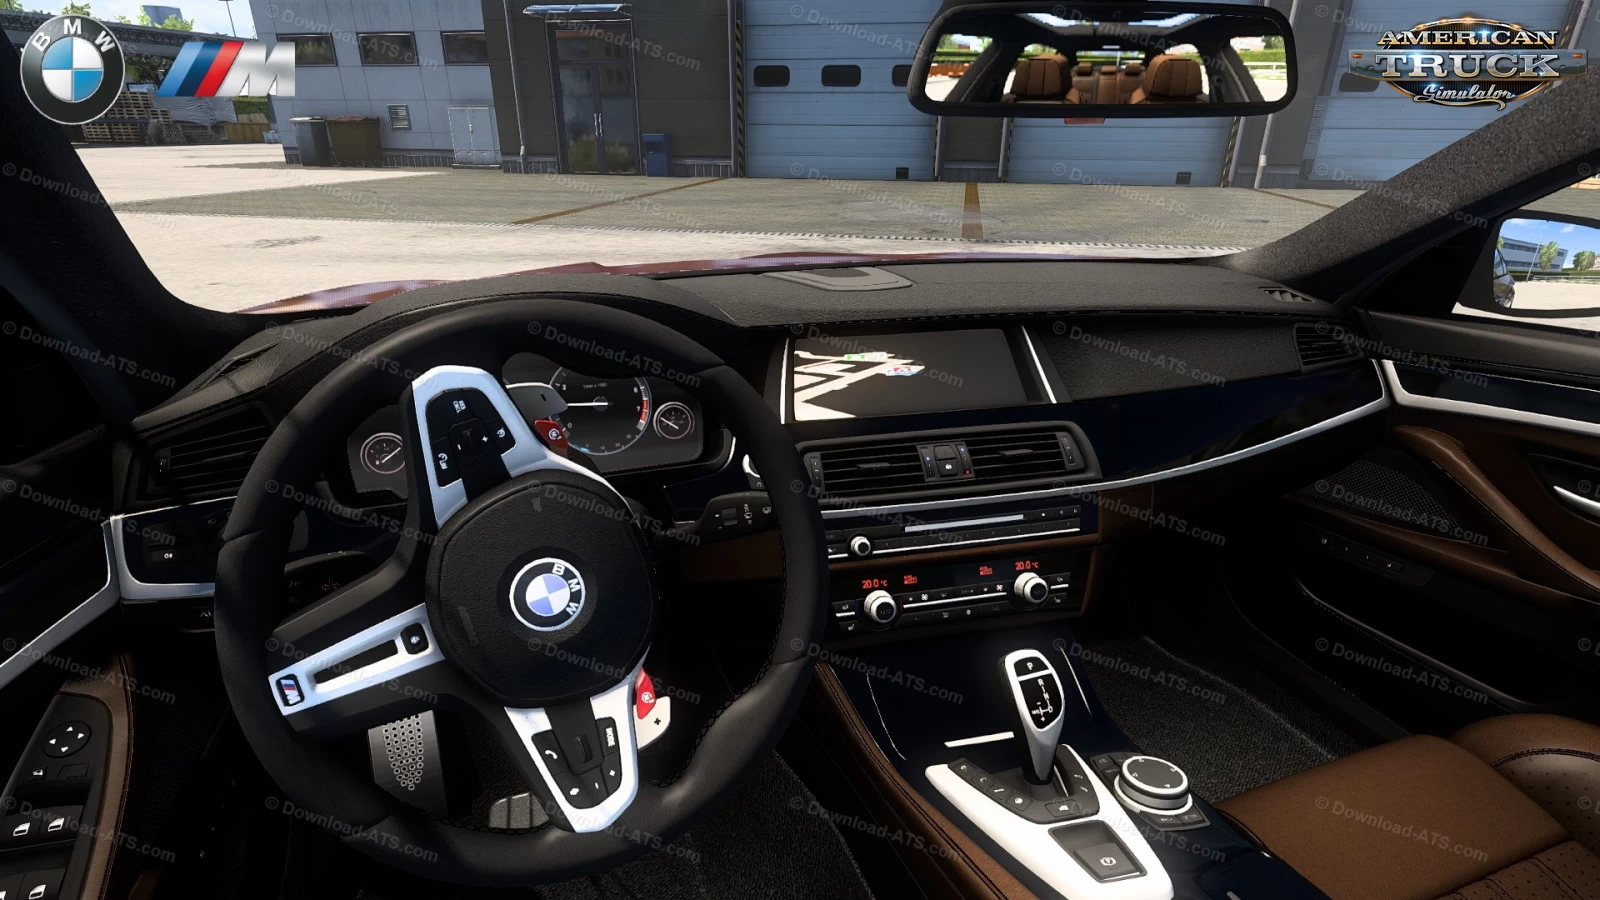 BMW 5 Series F10 M-Sport + Interior v3.1 (1.45.x) for ATS